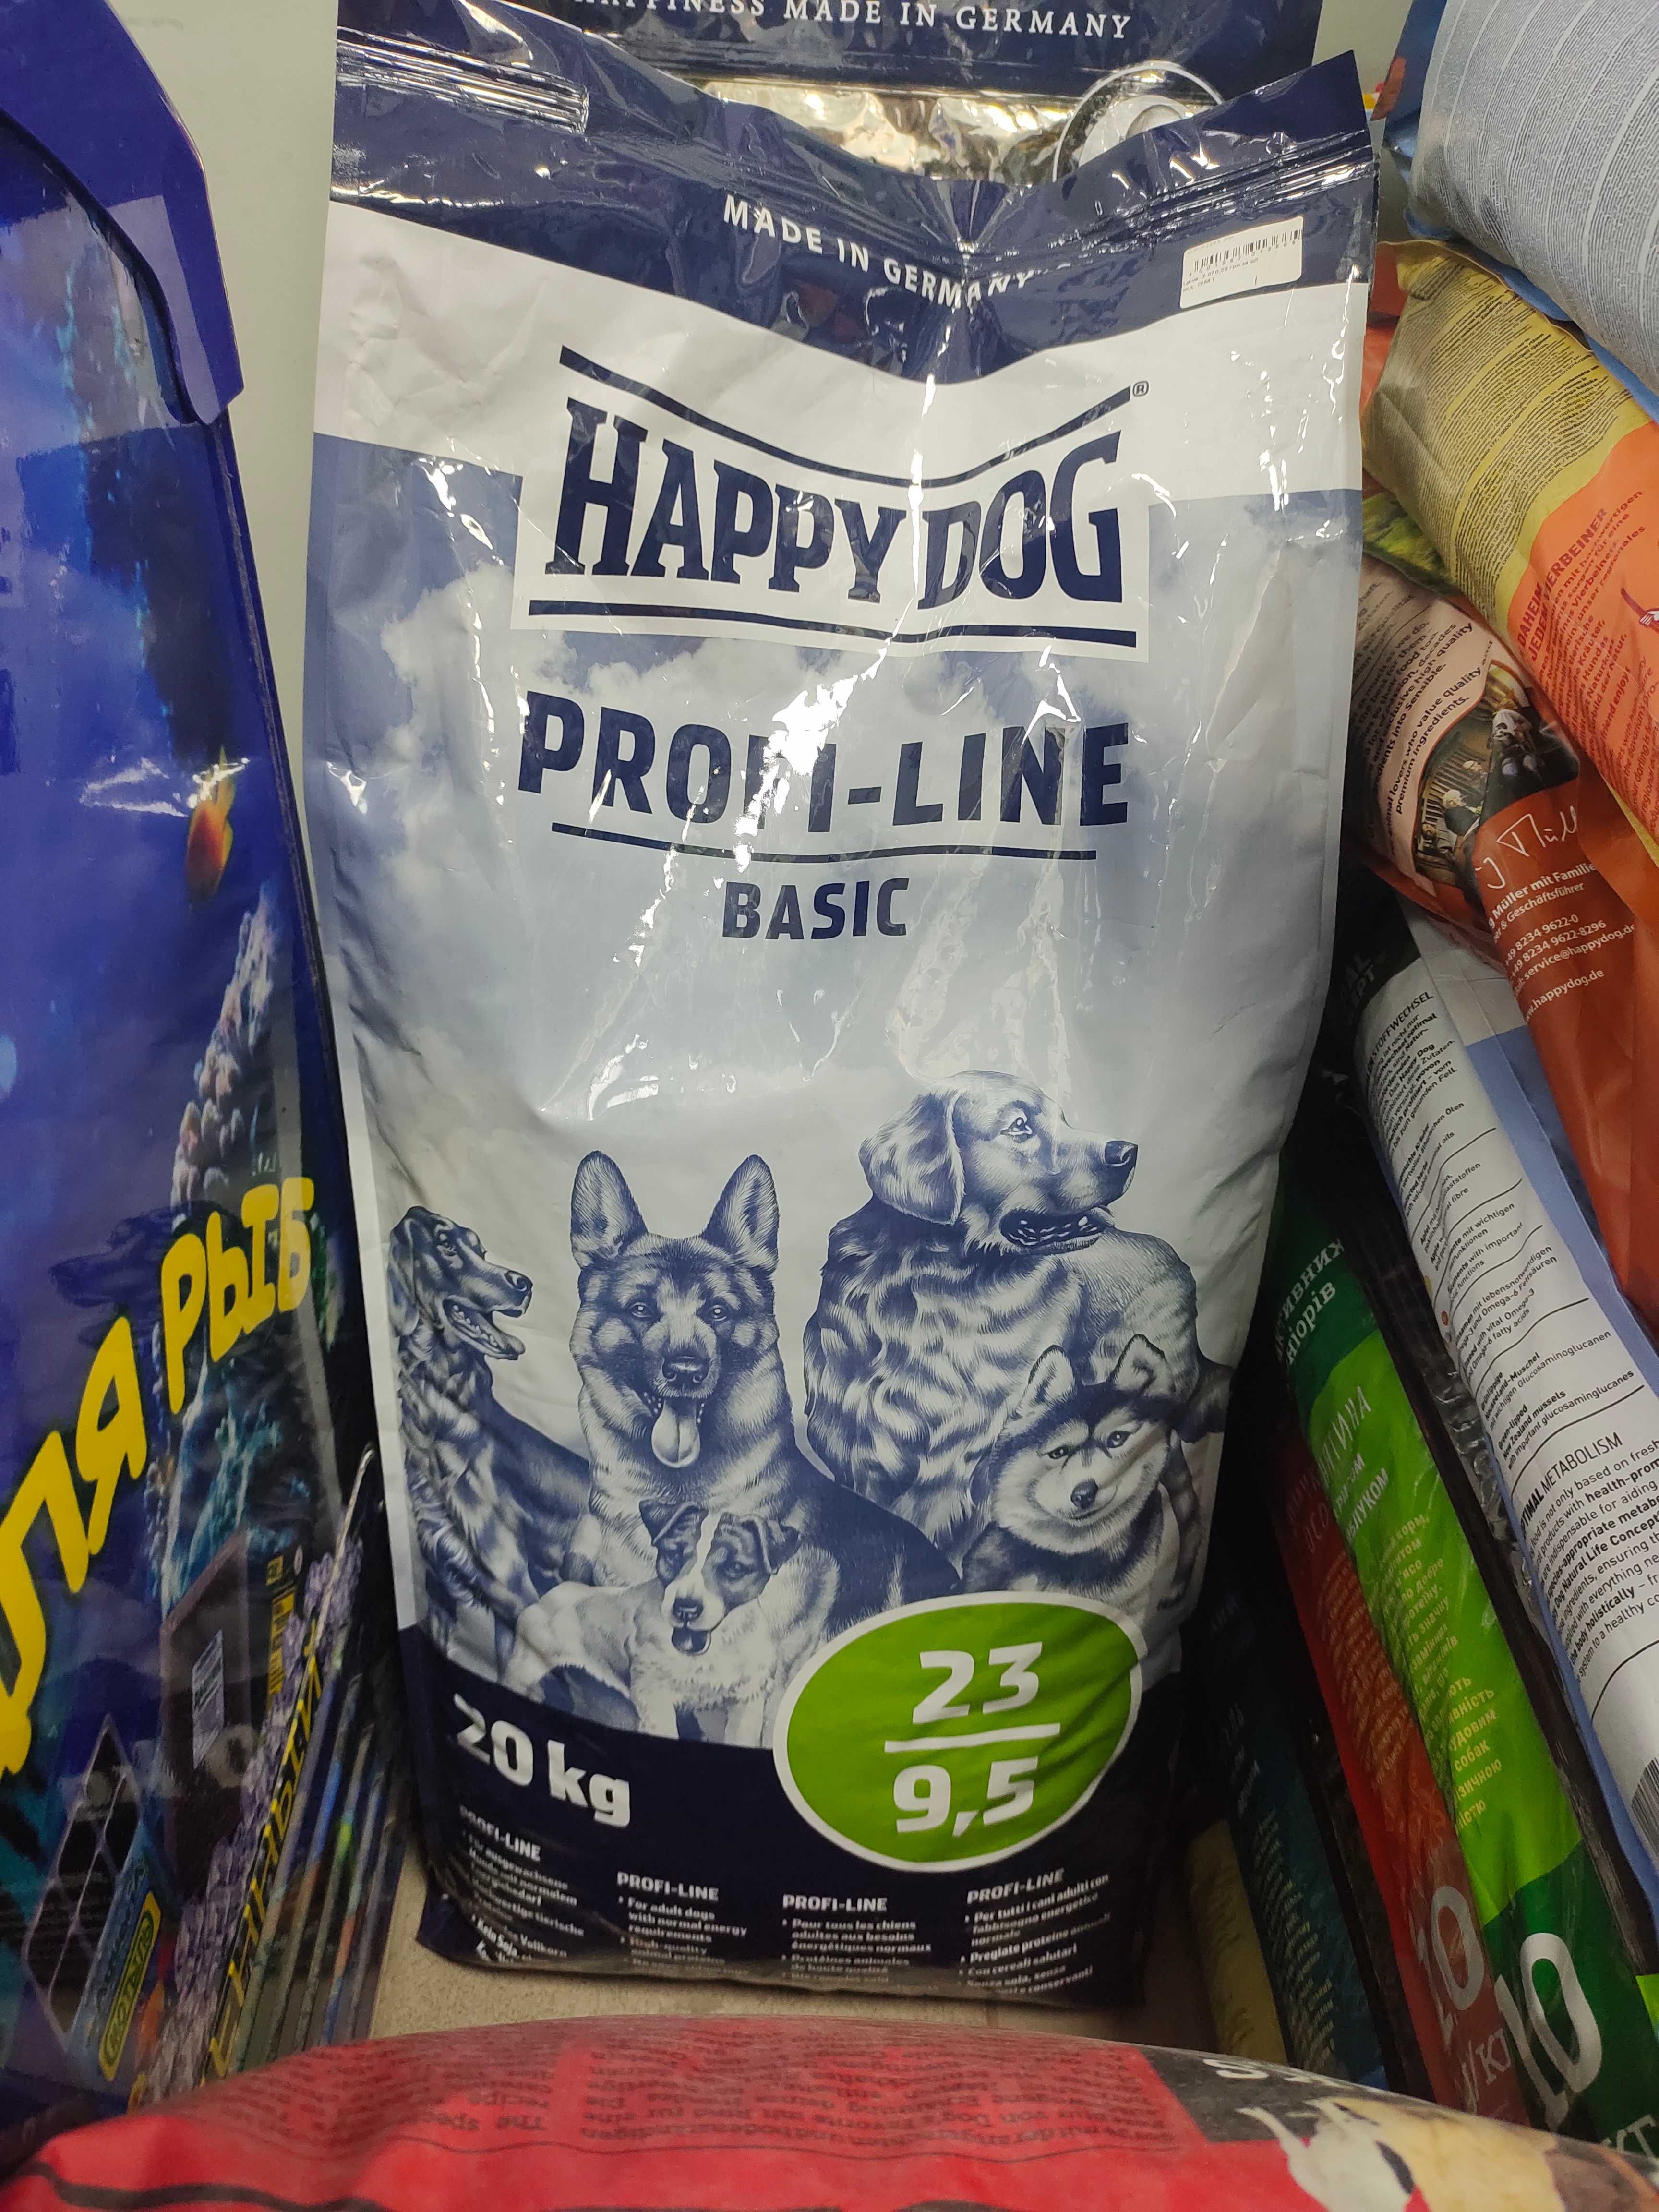 Happy Dog ( Хеппи Дог, Хеппі Дог) - корм для собак